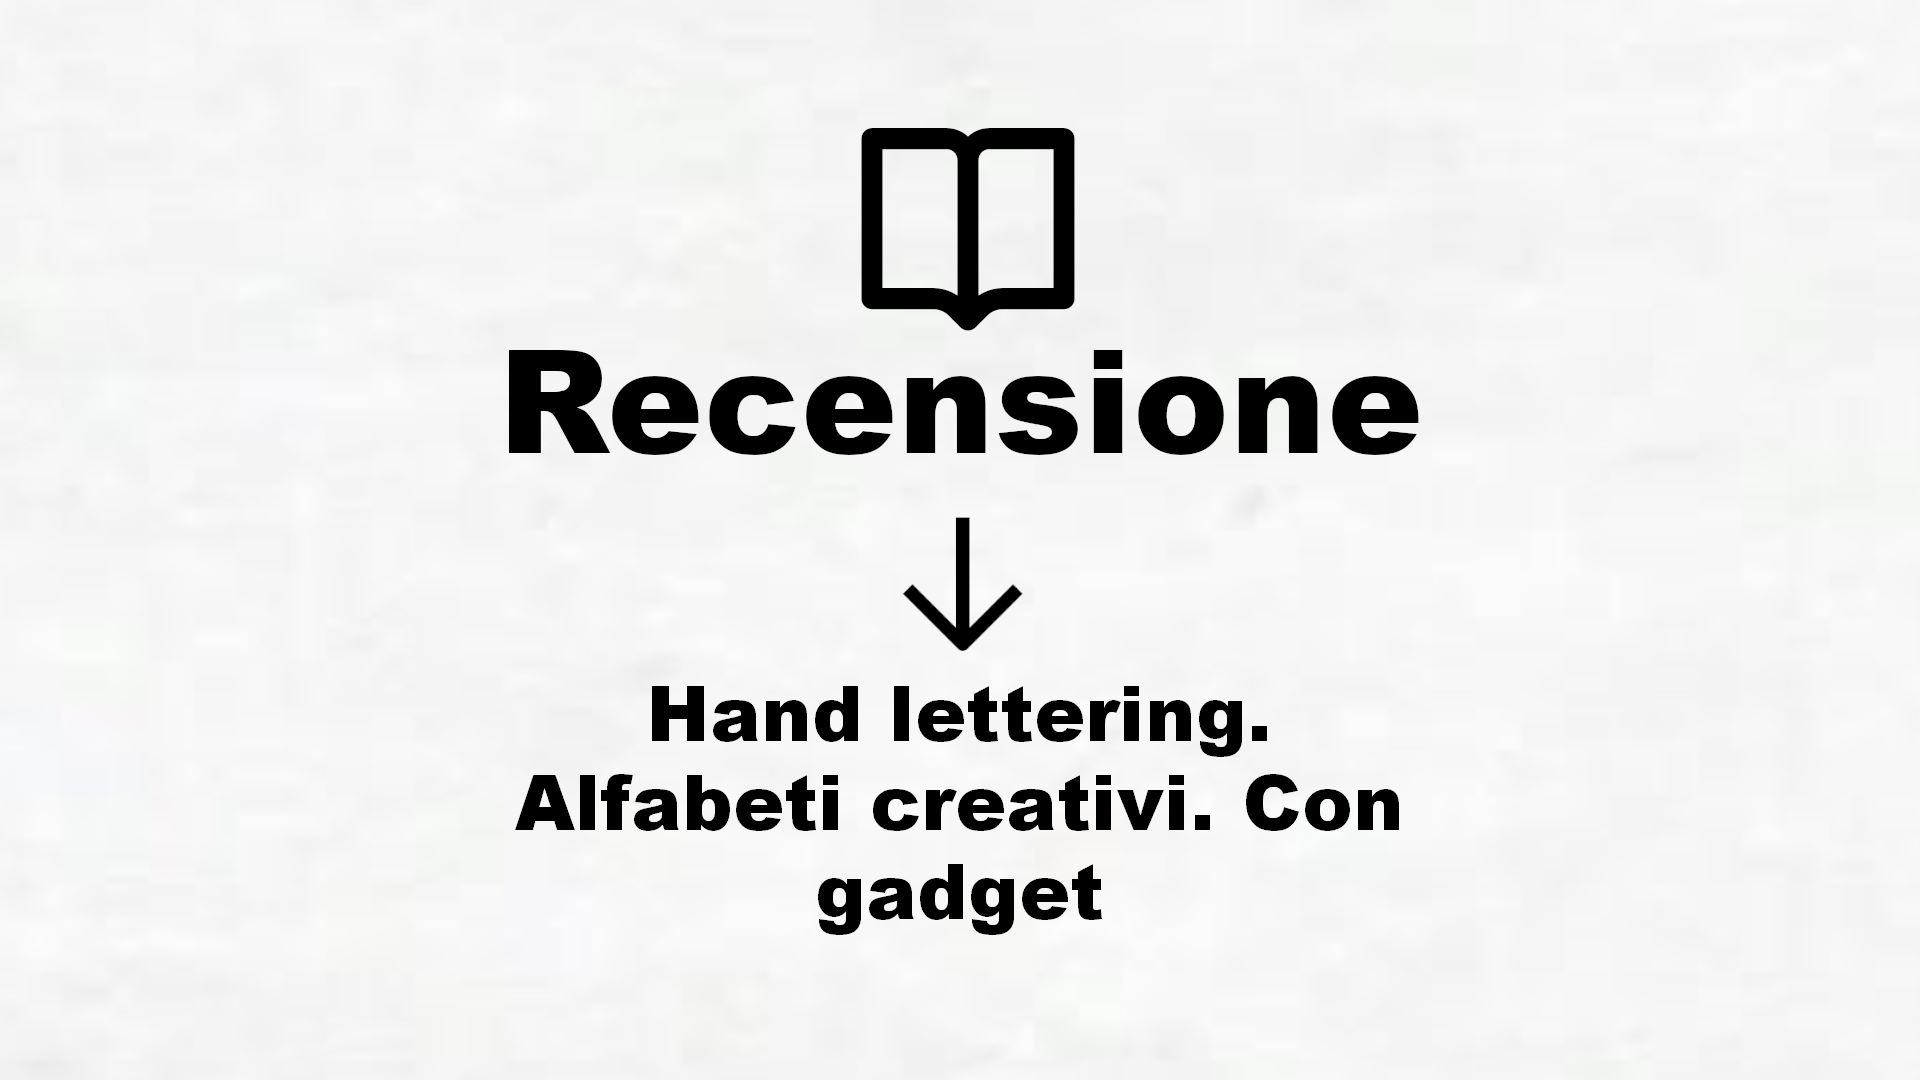 Hand lettering. Alfabeti creativi. Con gadget – Recensione Libro